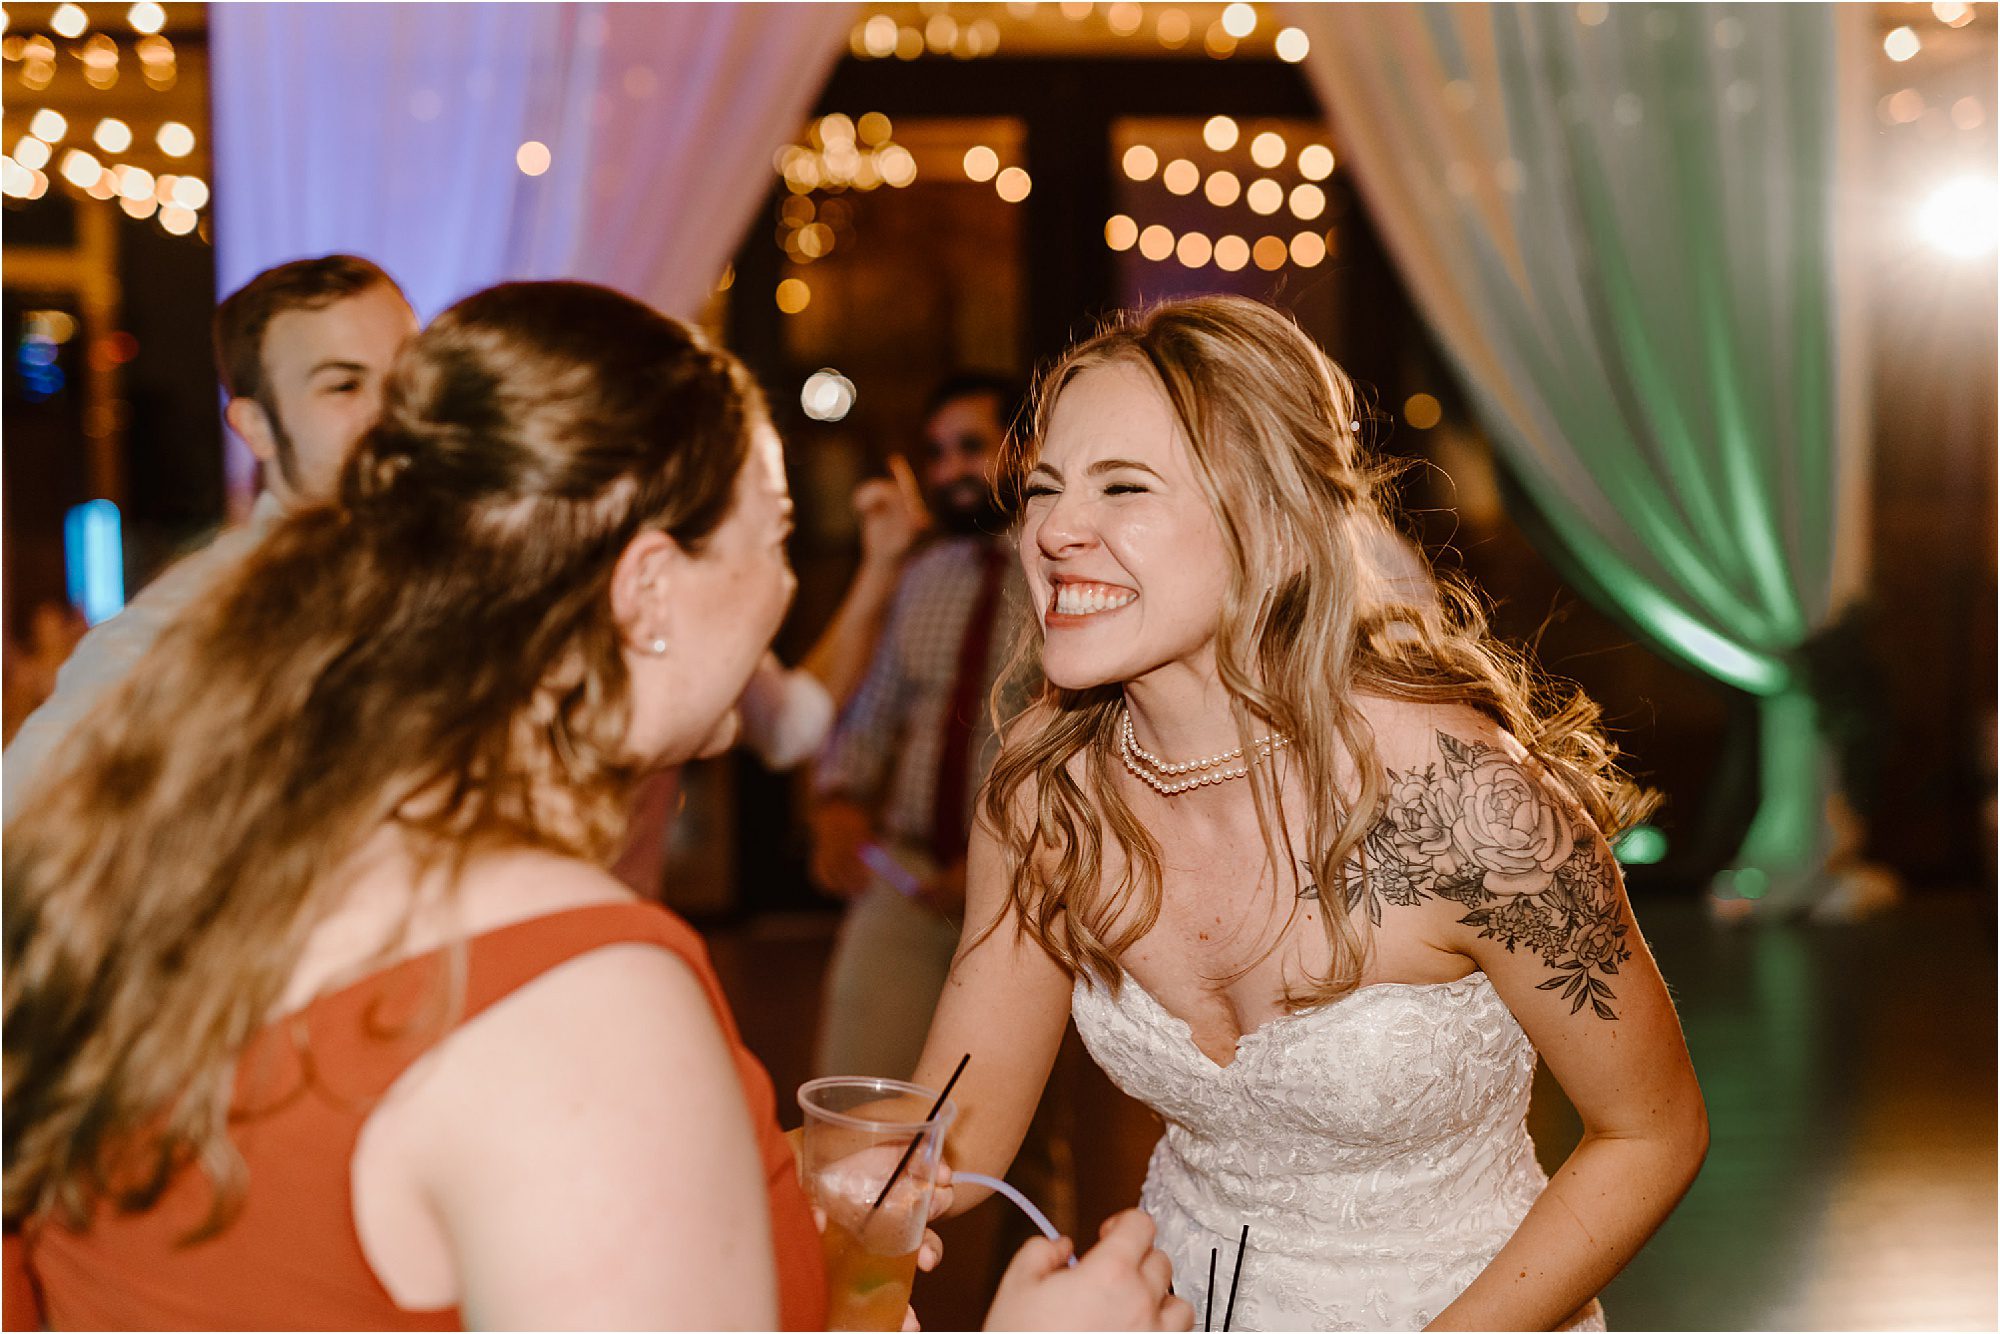 bride smiling and dancing with bridesmaid at wedding